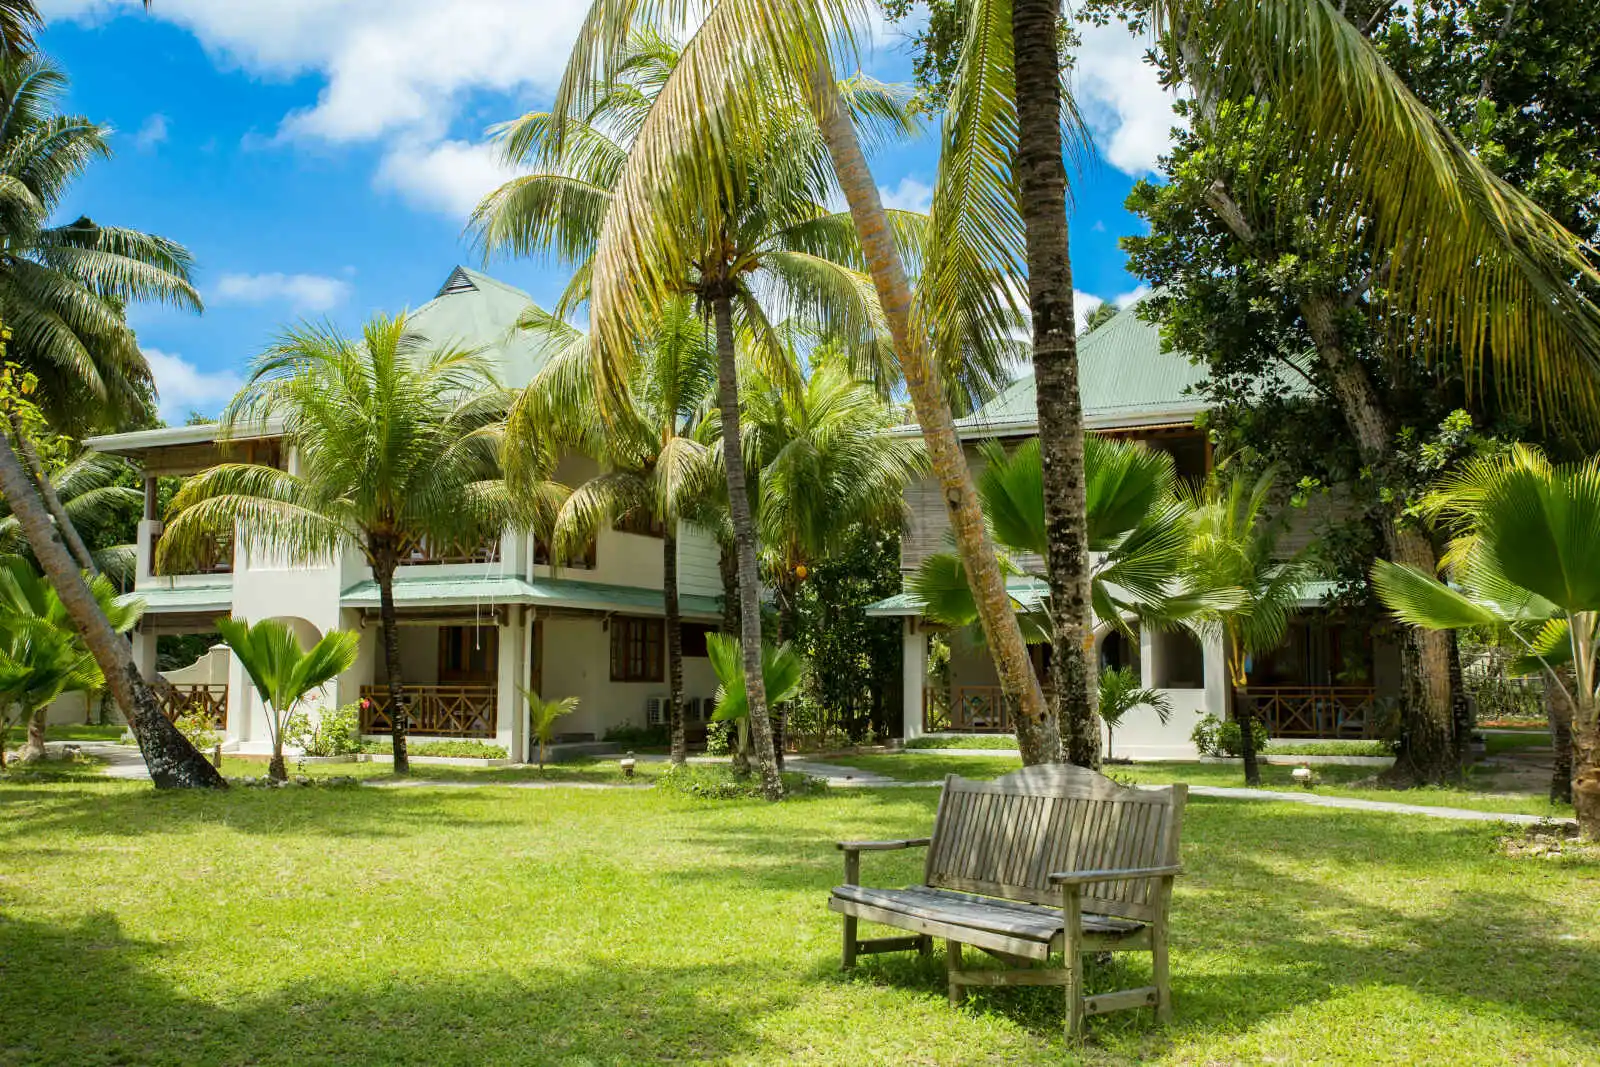 Chambres et jardin, Indian Ocean Lodge, Seychelles